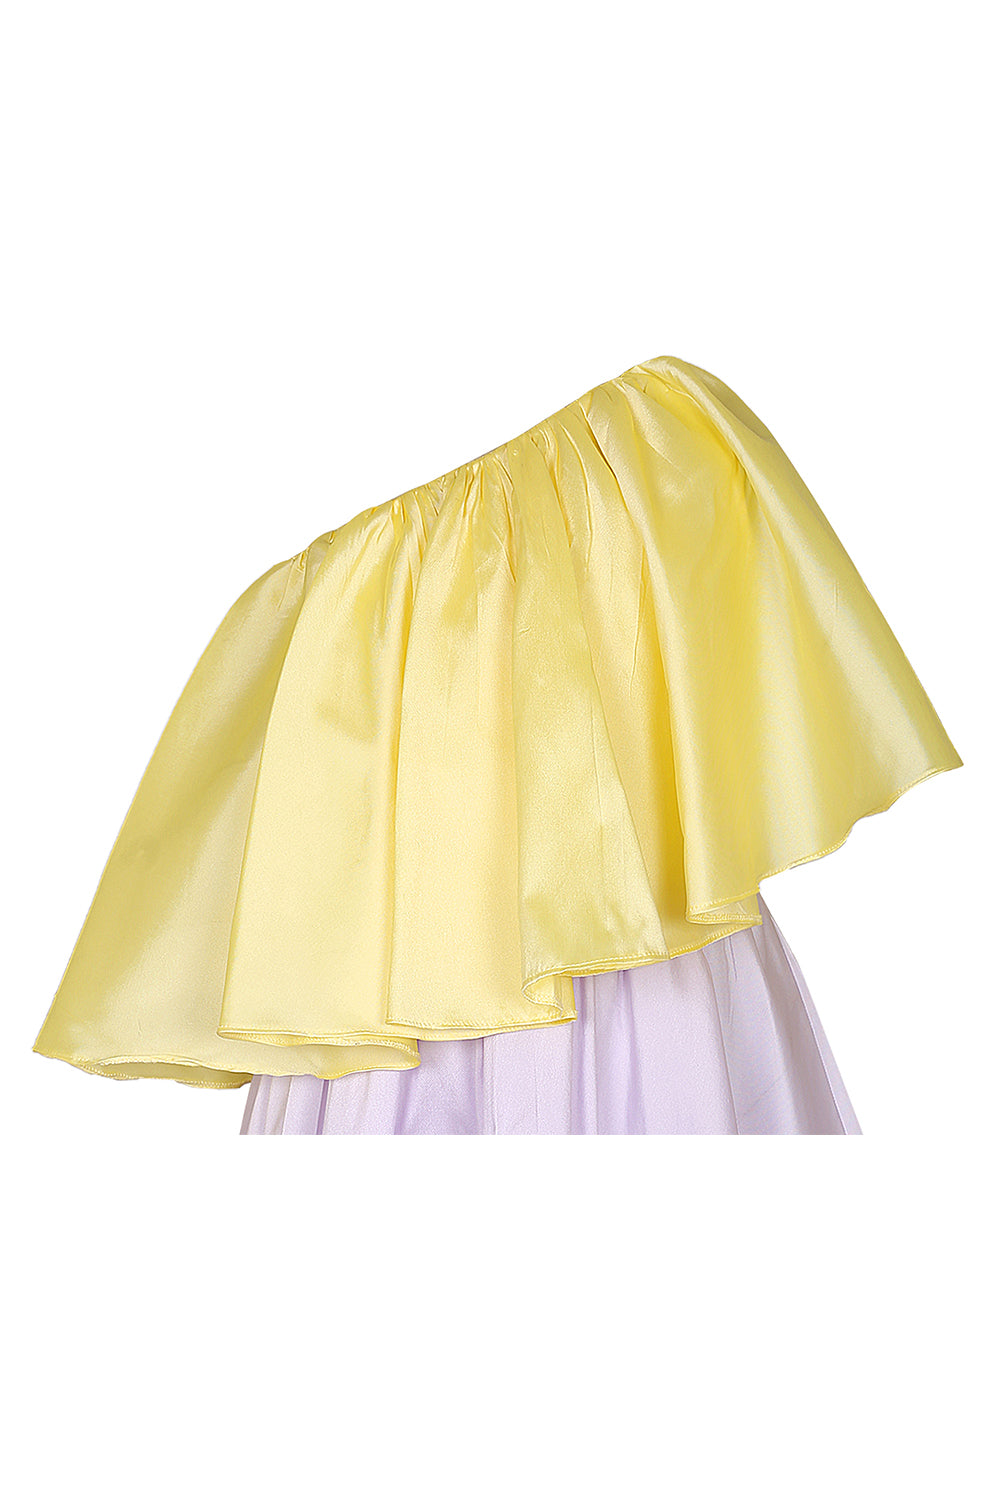 Candylicious Lemon-Lilac Dress